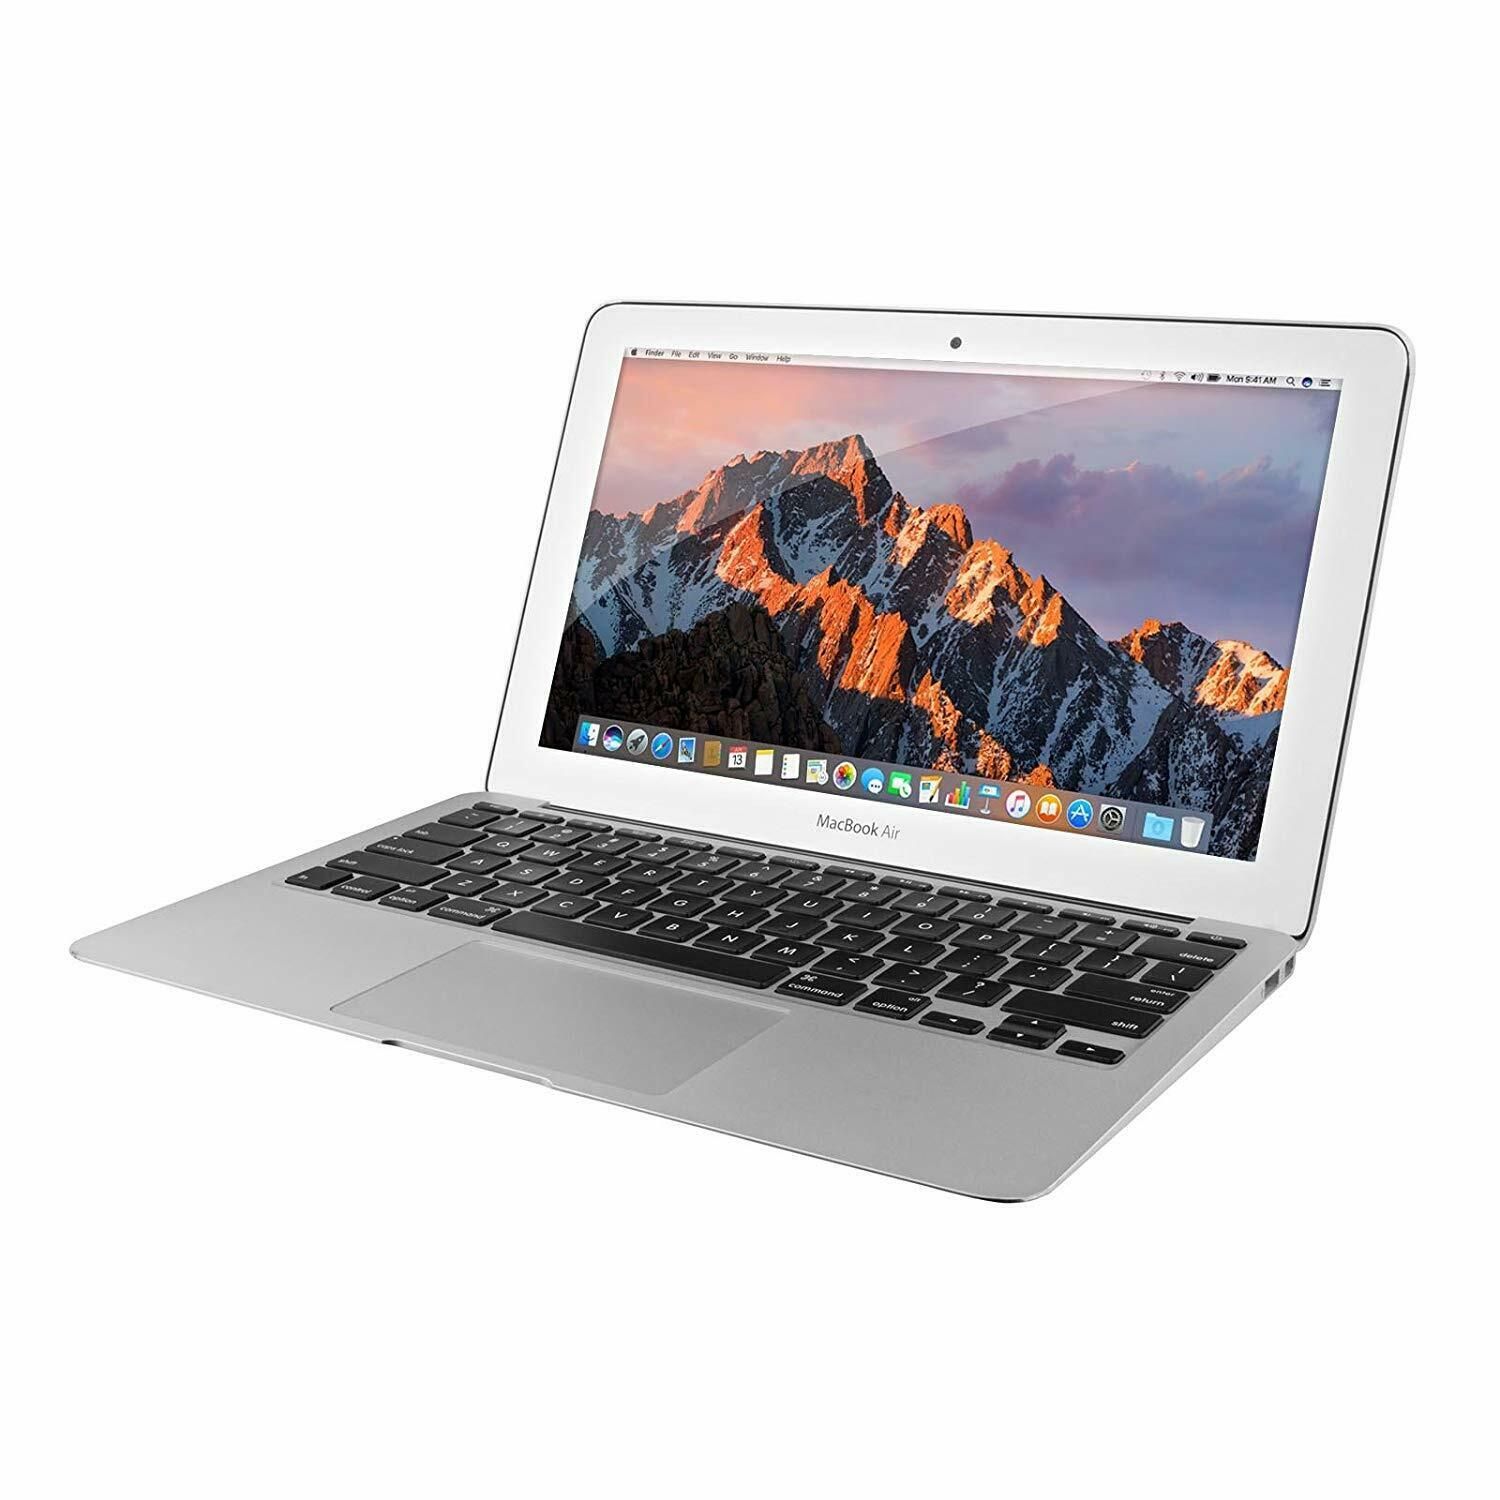 MacBook Air 11.6″ MJVM2 Model 2015